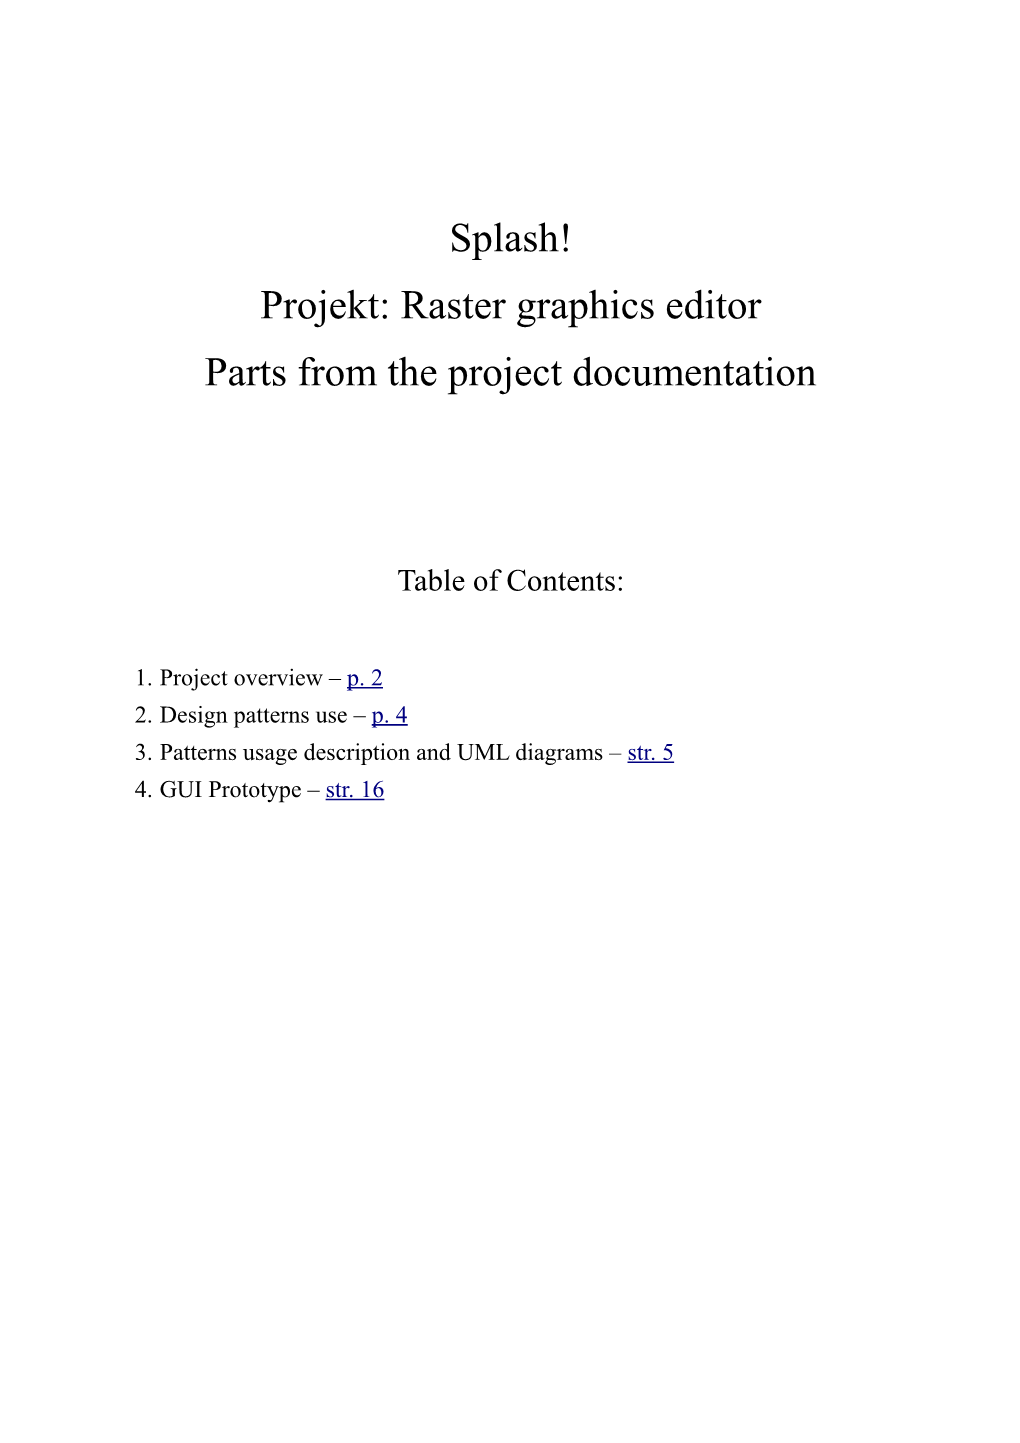 Splash! Projekt: Raster Graphics Editor Parts from the Project Documentation